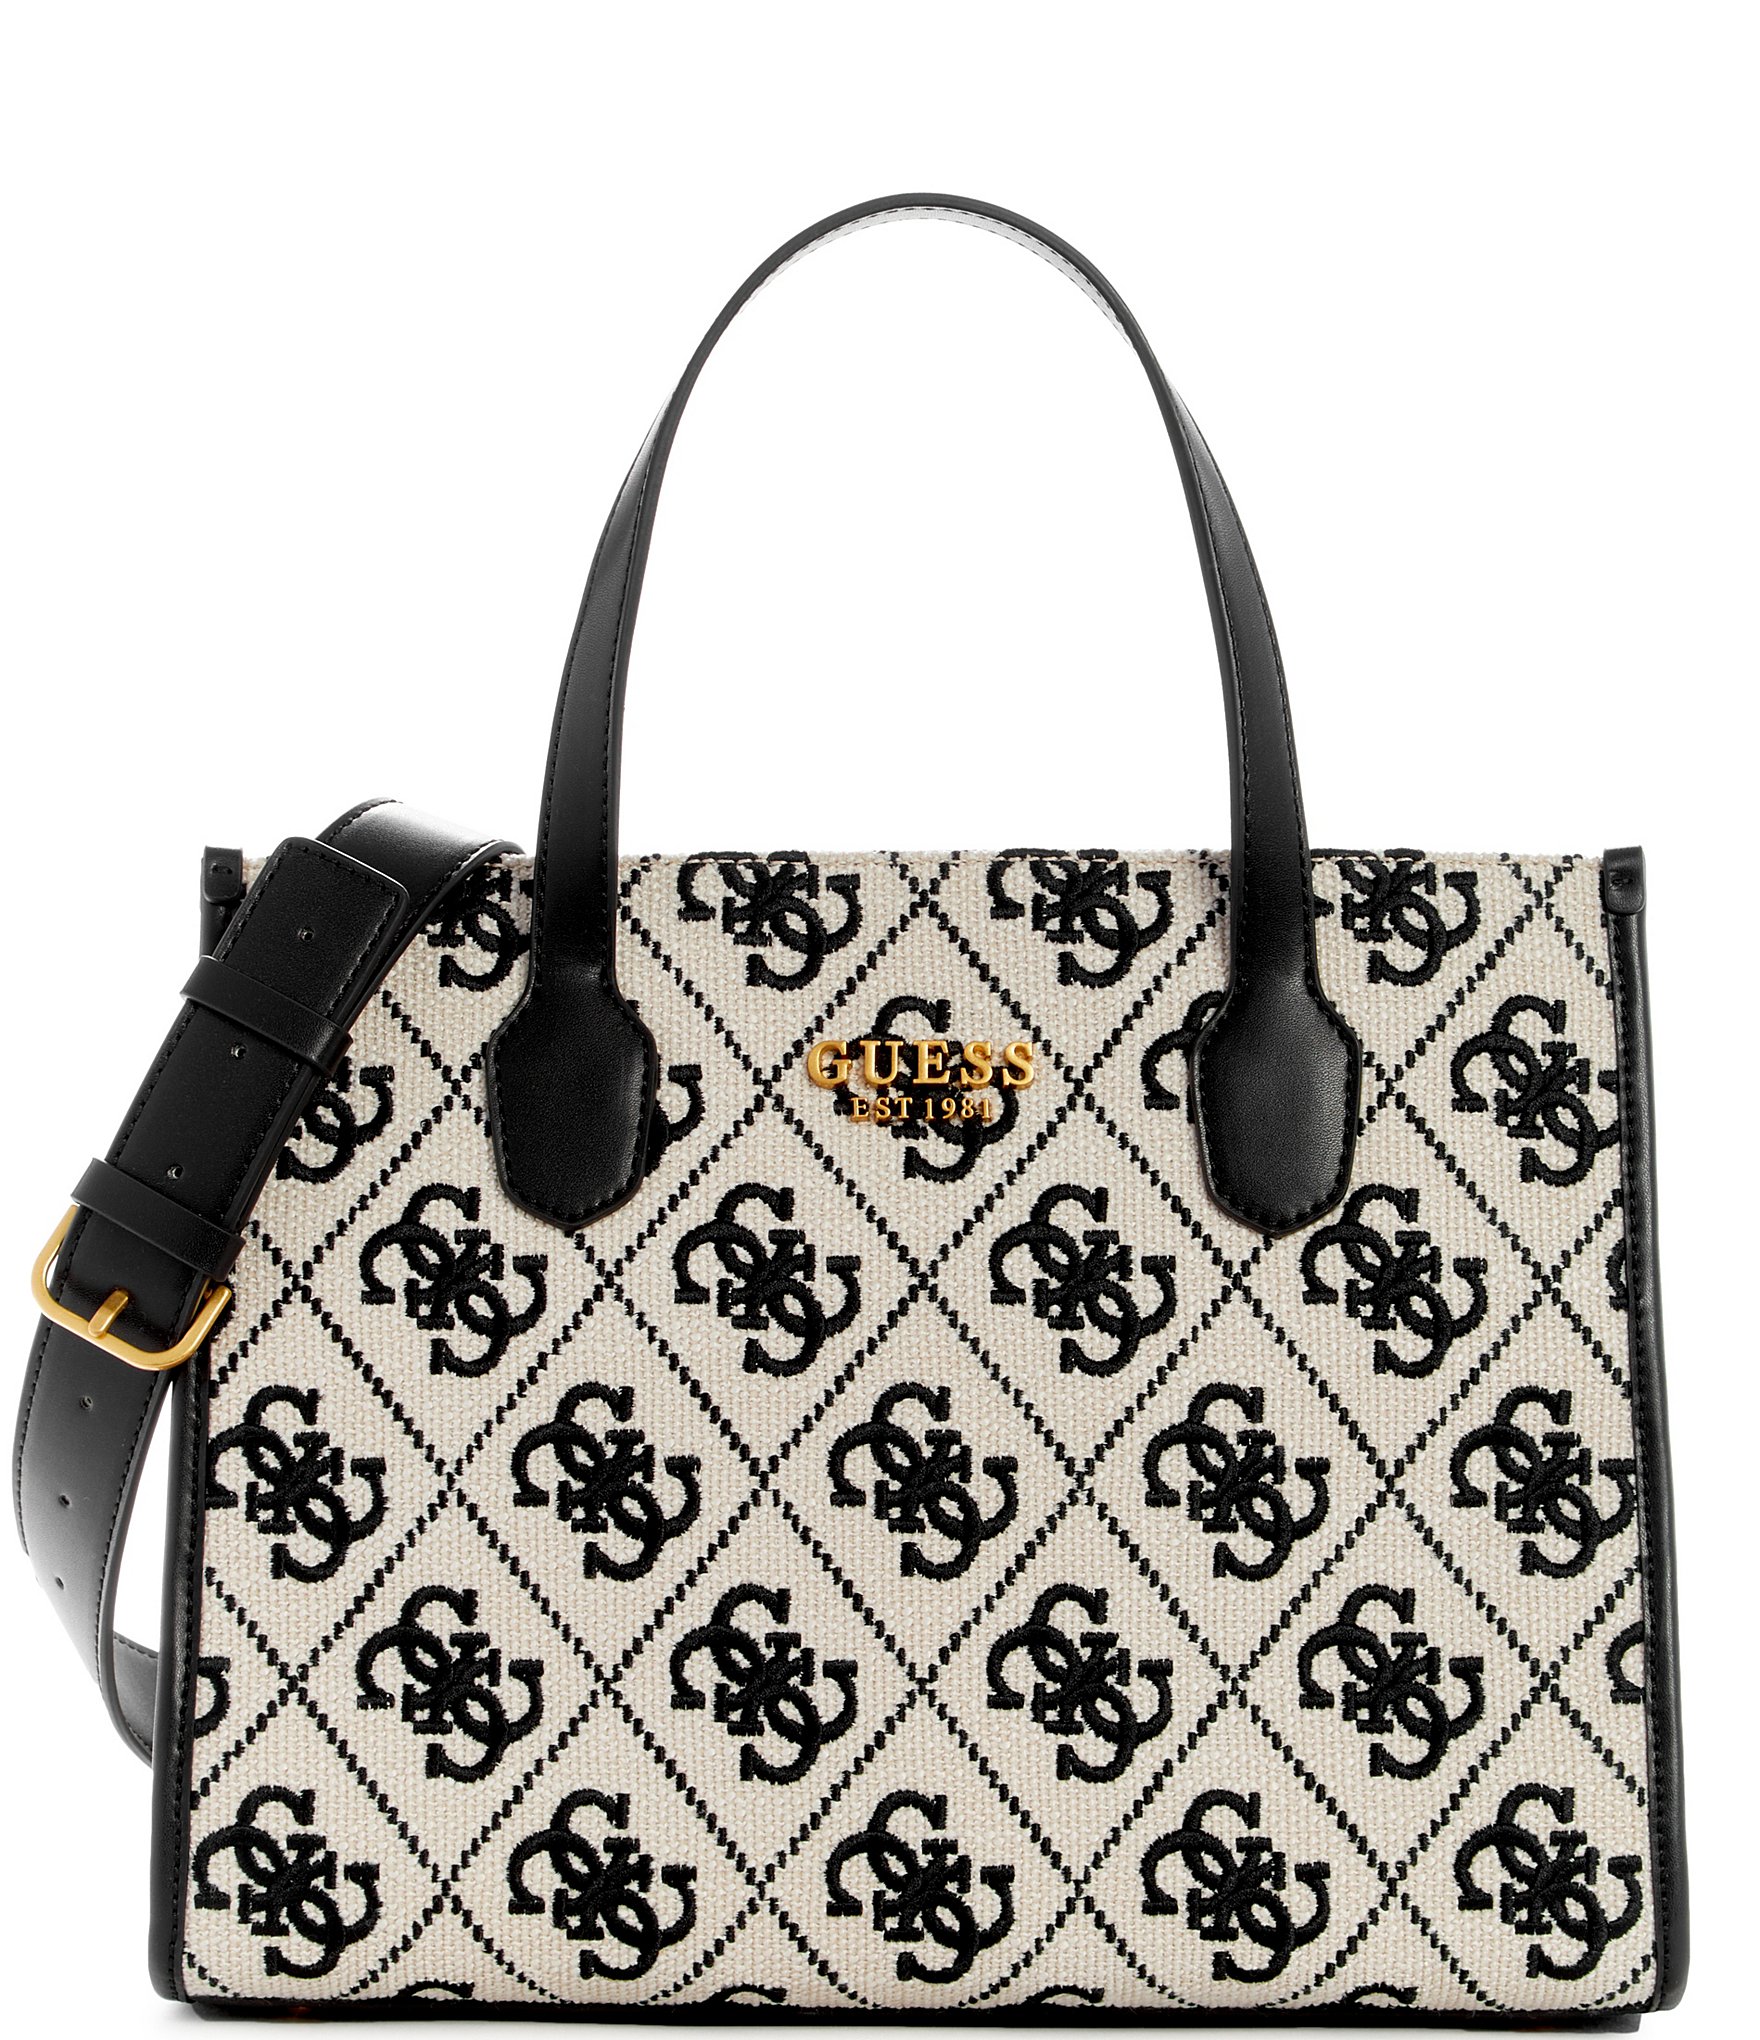 GUESS Women Handbags - Vestiaire Collective